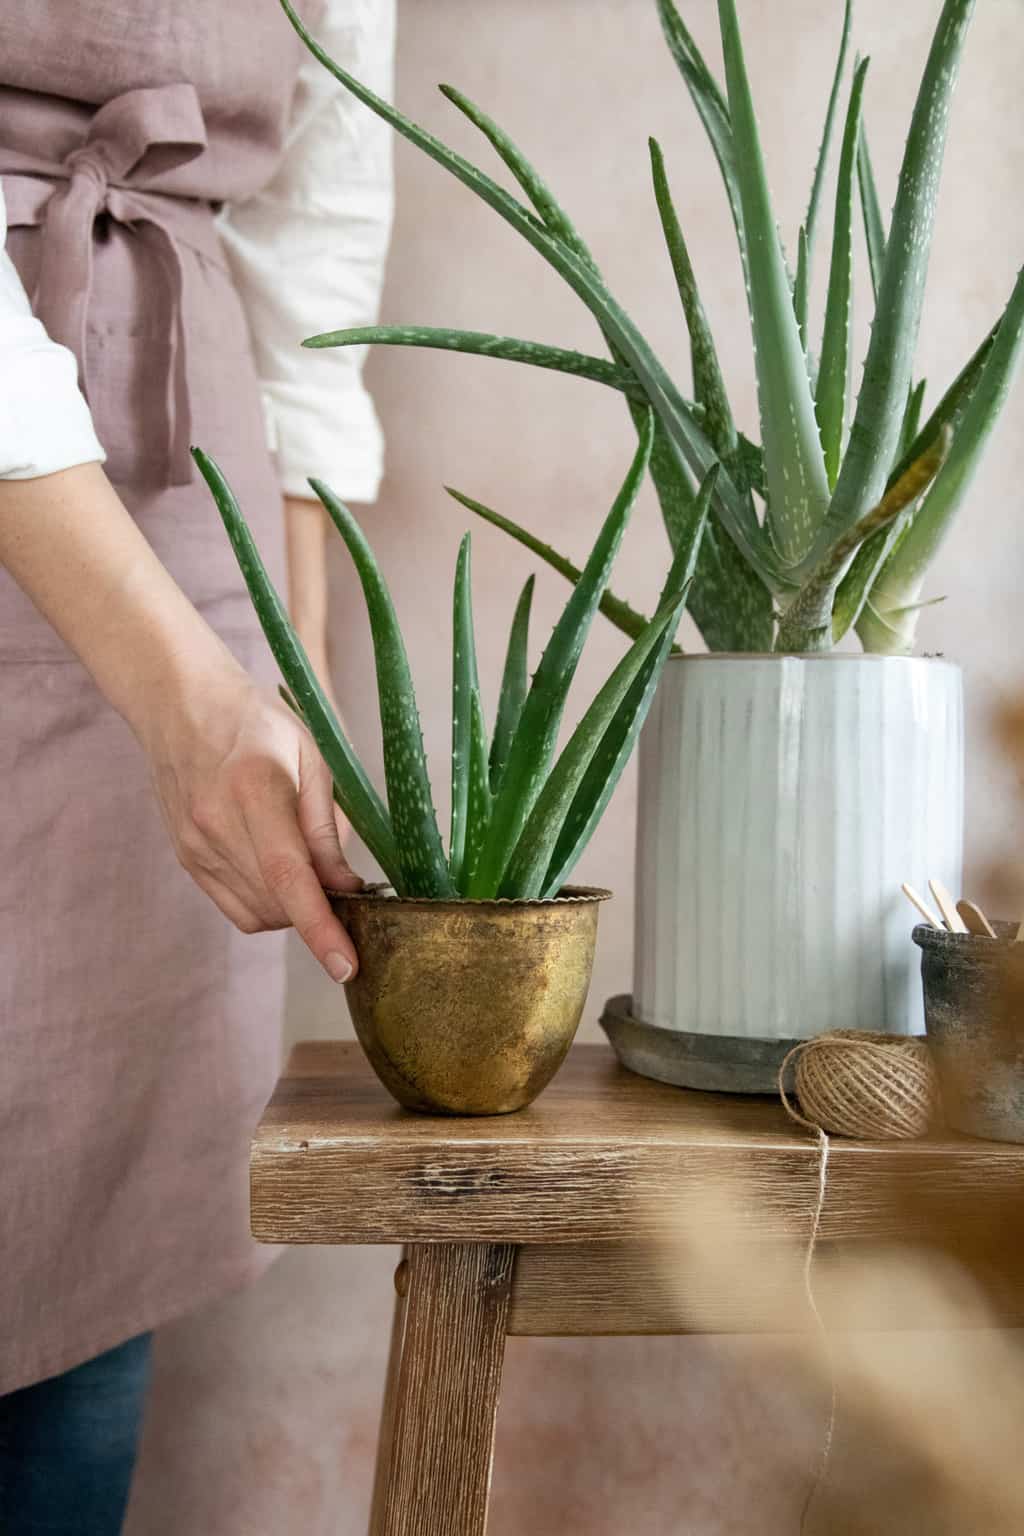 vat Bevoorrecht kiezen 7 Rules for Growing + Caring For Your Aloe Vera Plant - Hello Glow